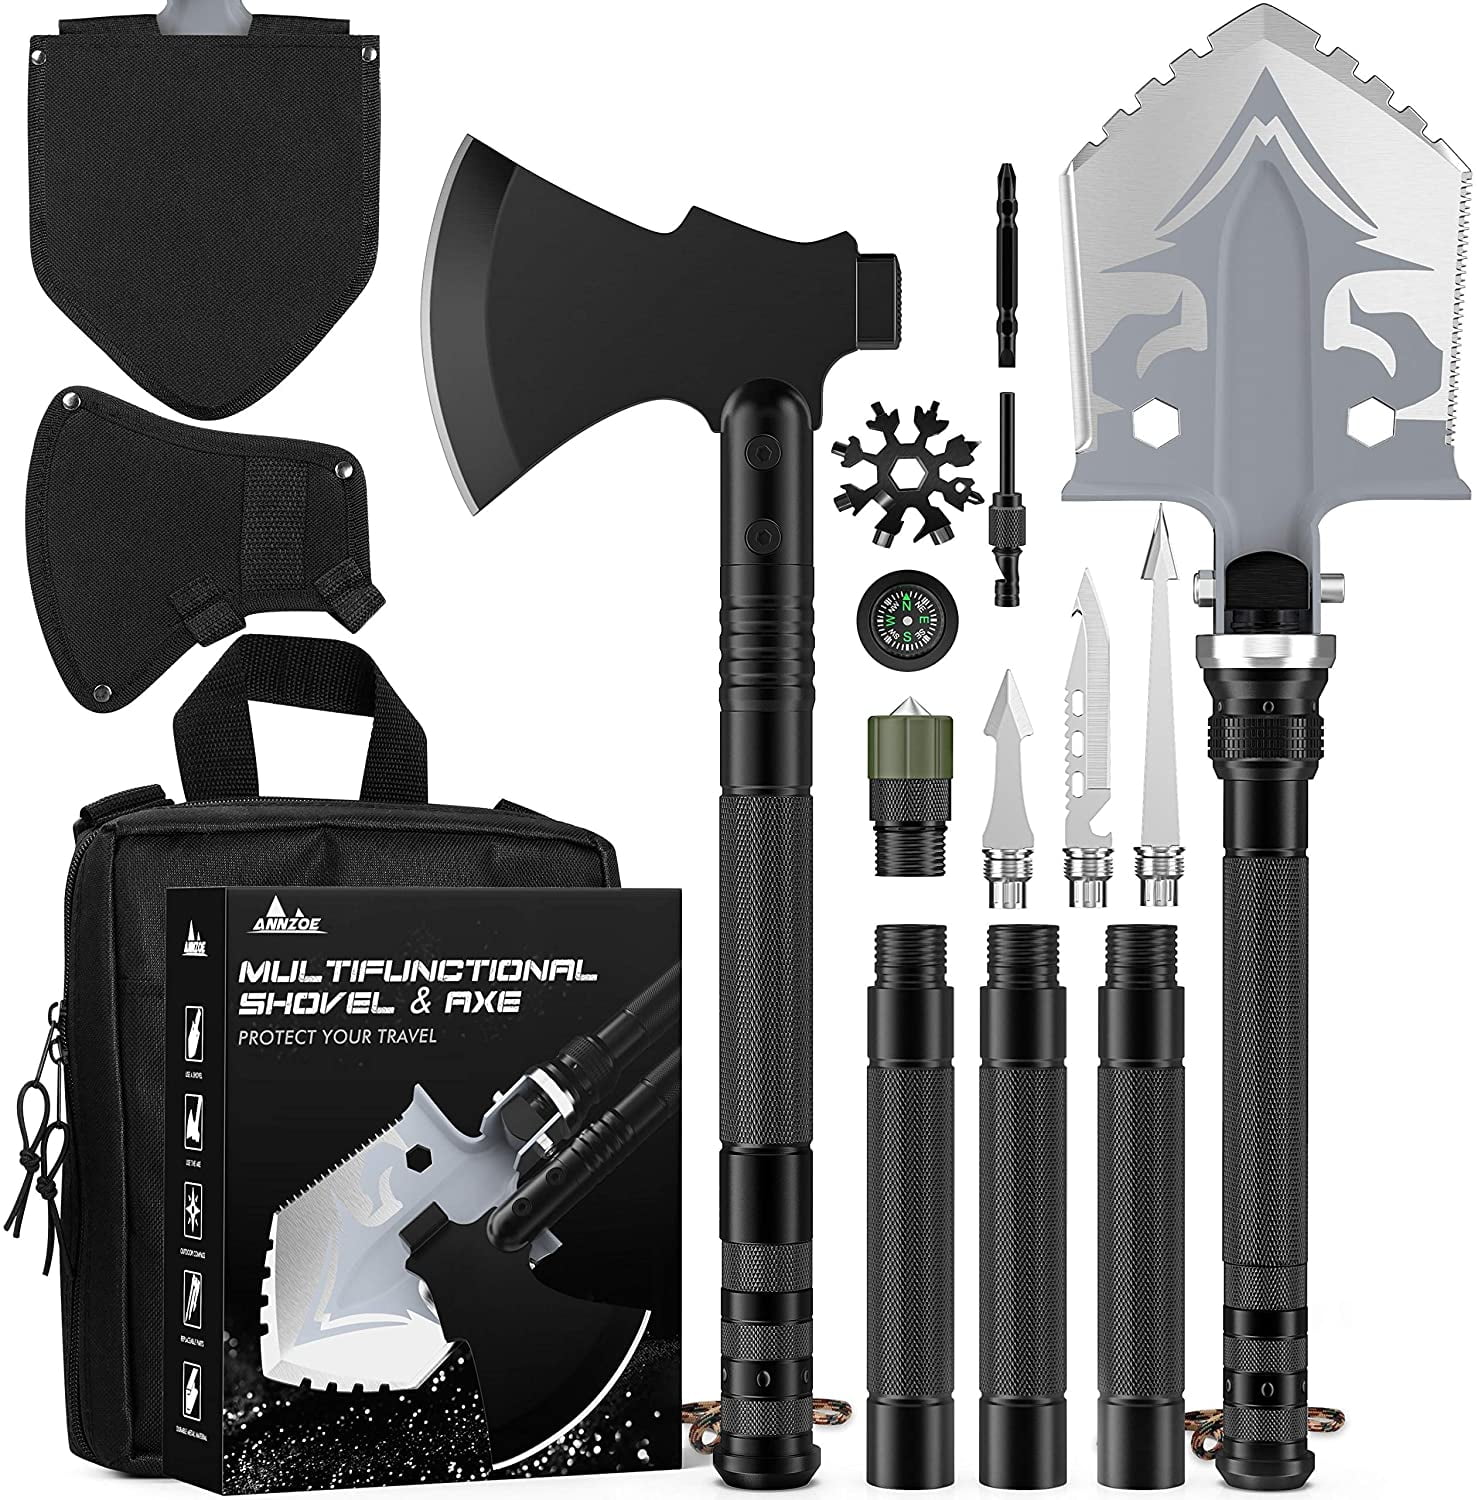 Folding Survival Shovel Axe Gear Kit Outdoor Military Tactical Multi Tools Set 